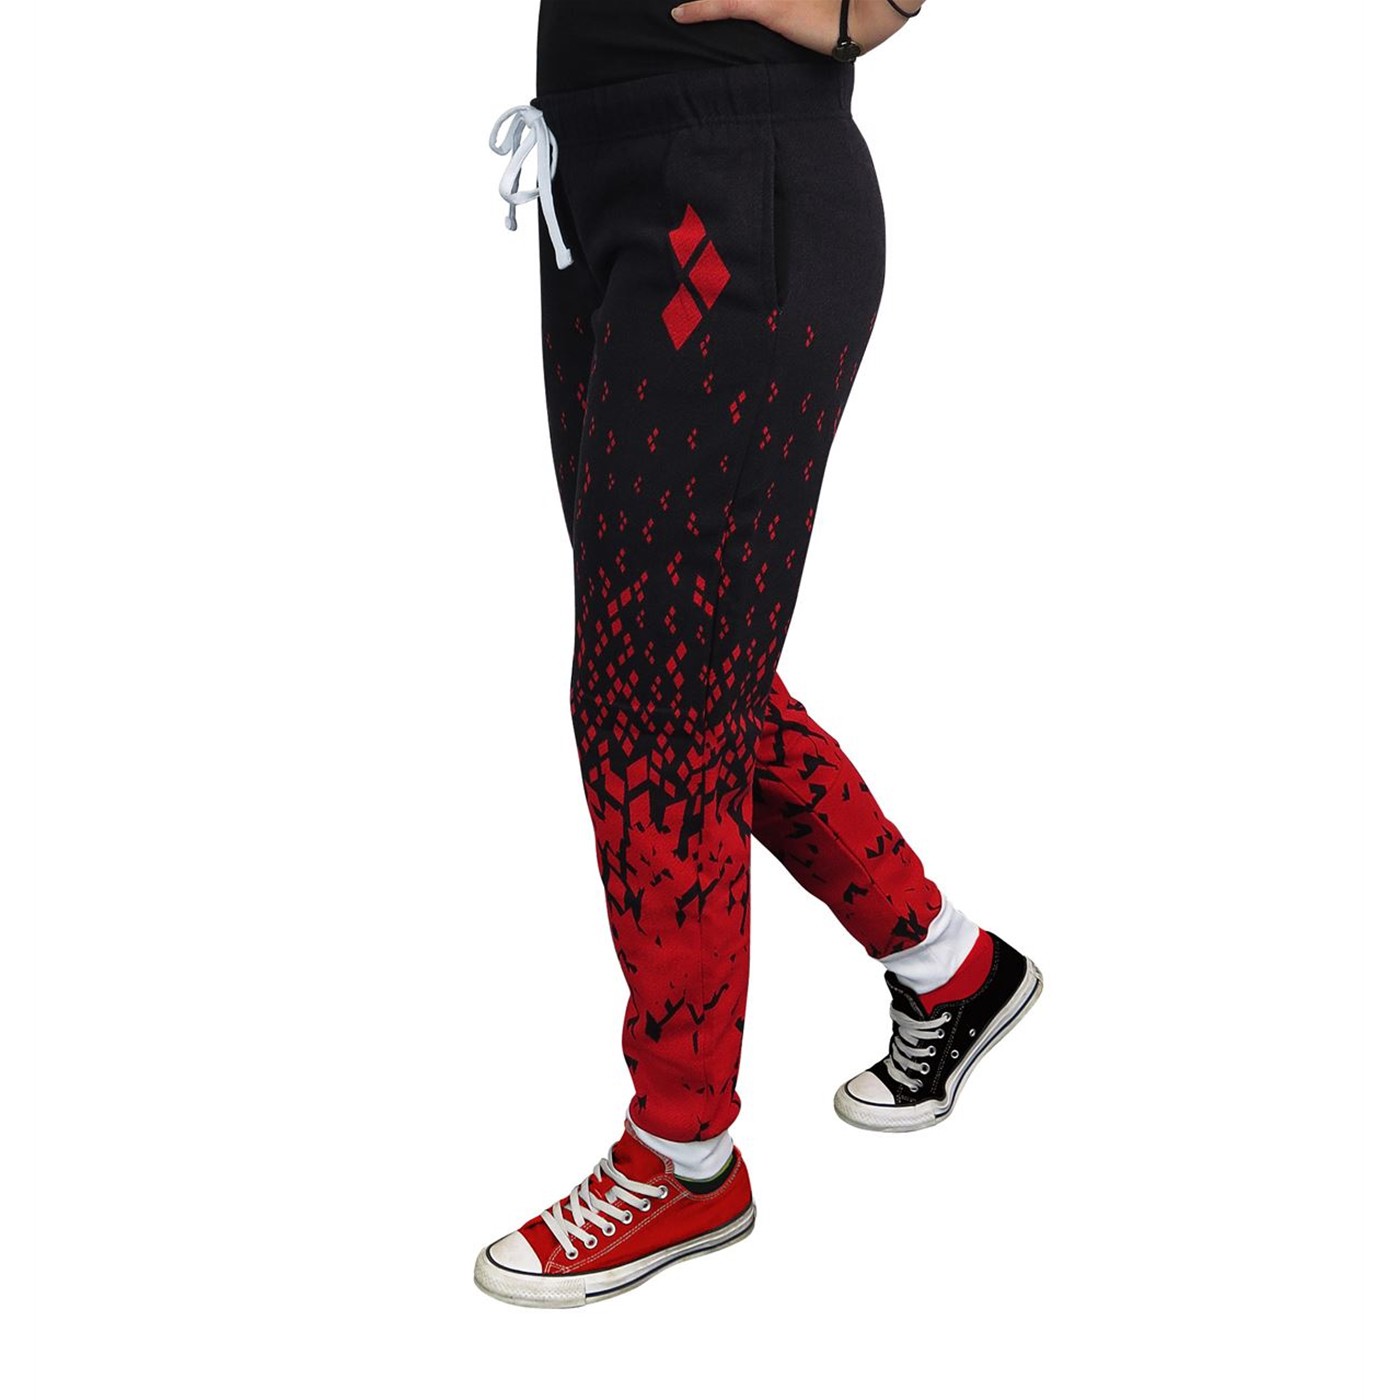 Harley Quinn Ombre Women's Jogging Pants